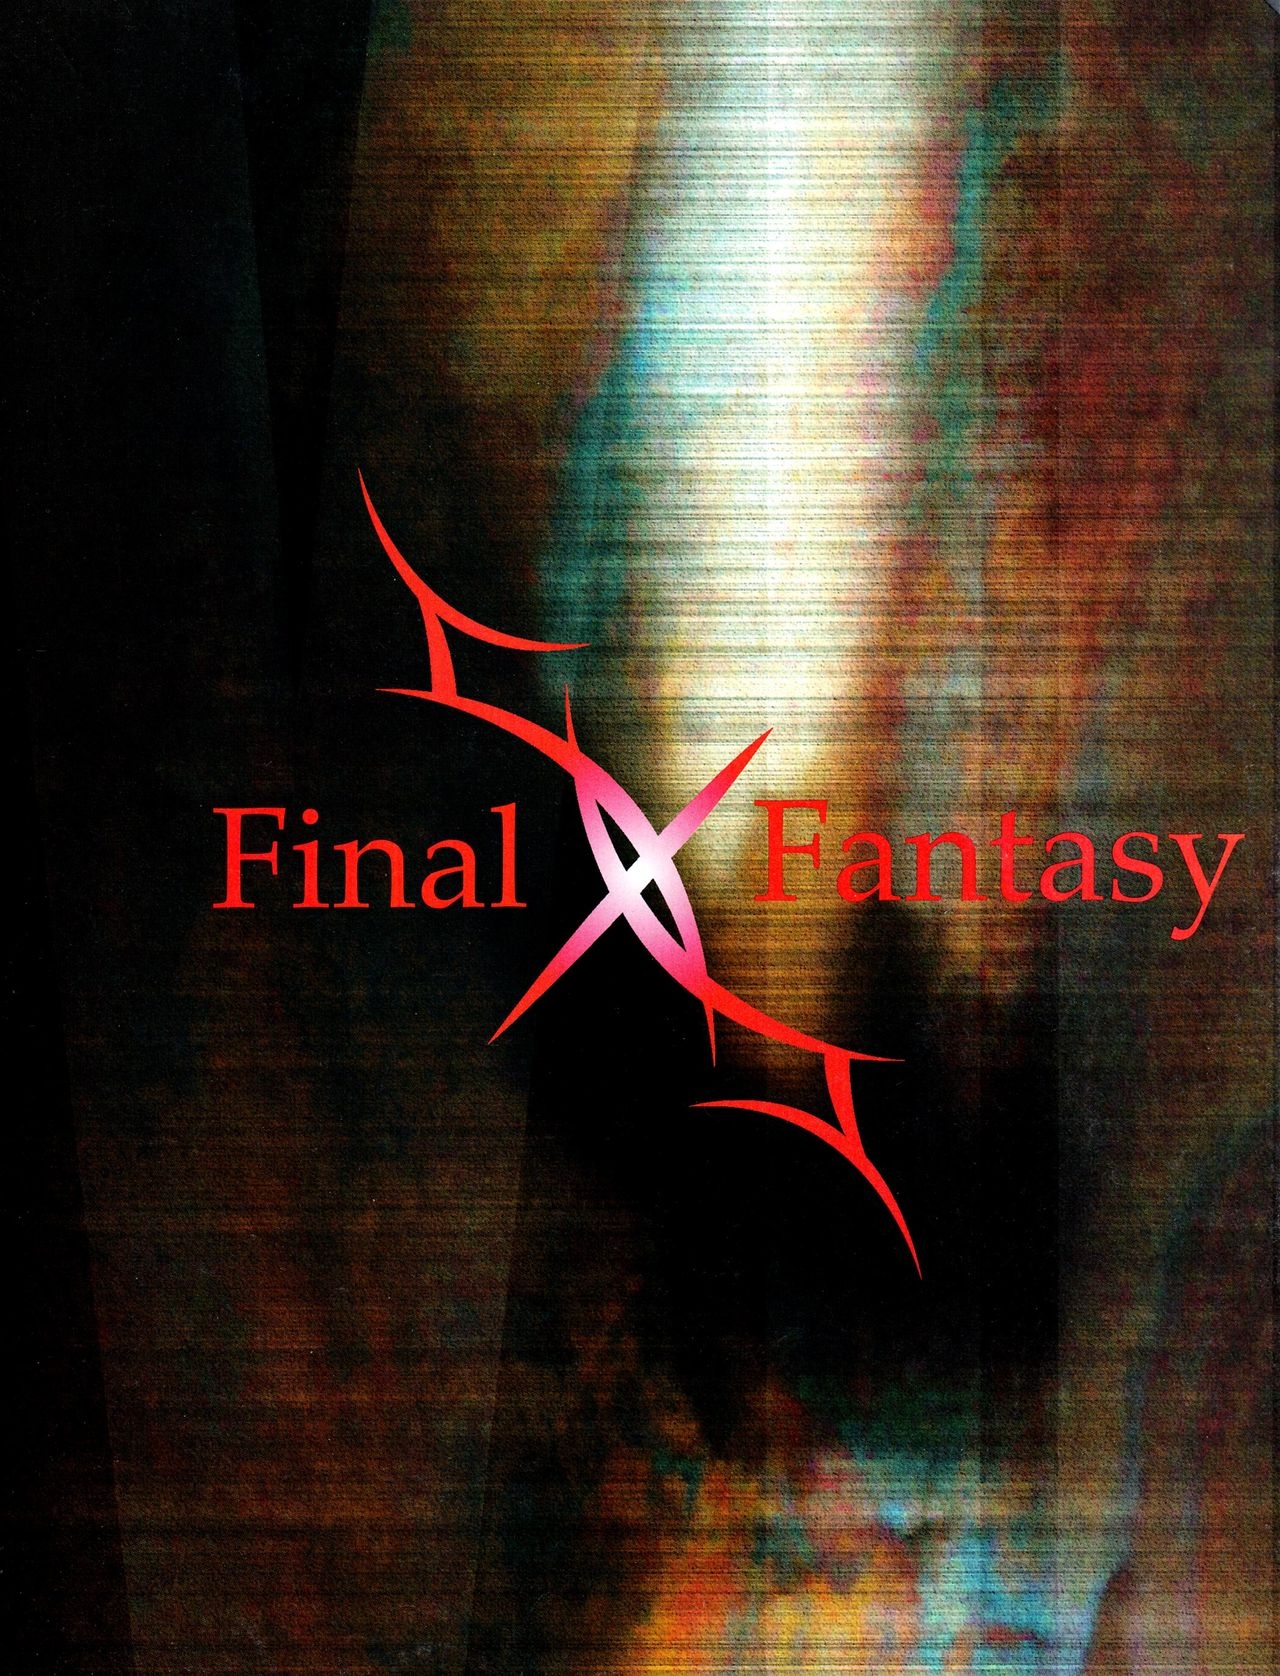 Final Fantasy VII Versus Guide 2